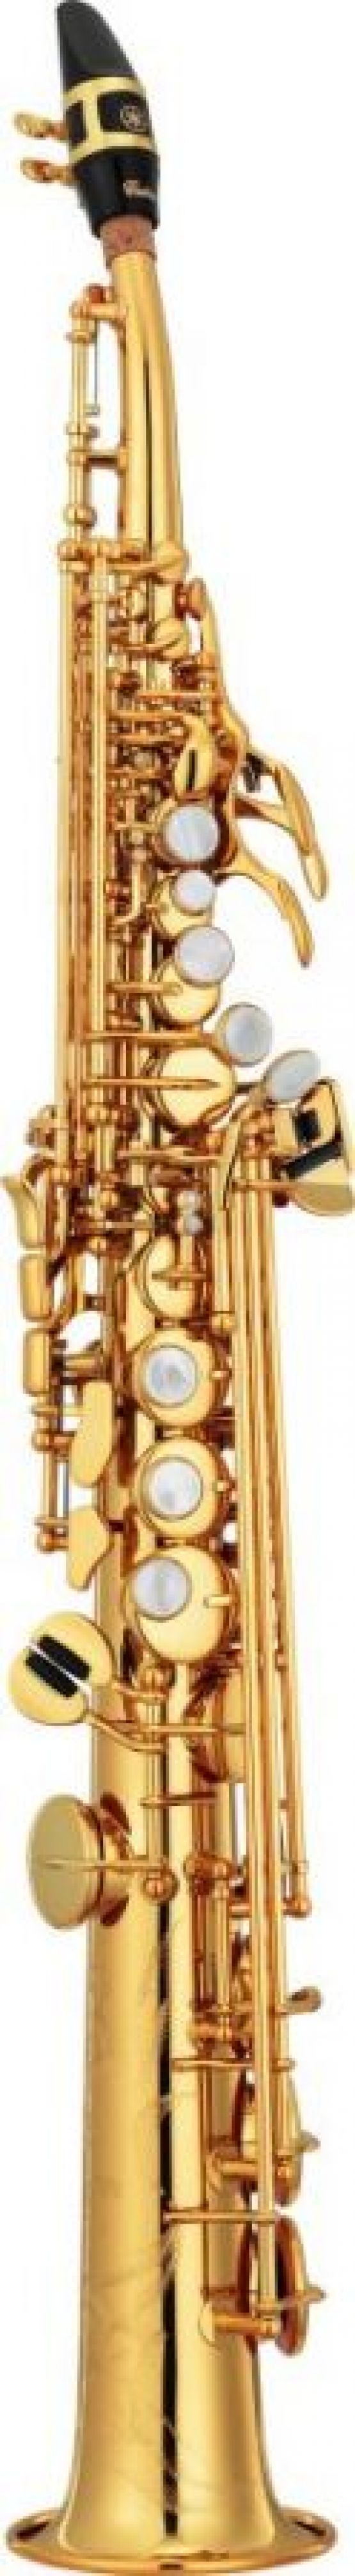 Yamaha YSS82ZR Soprano Saxophone main image